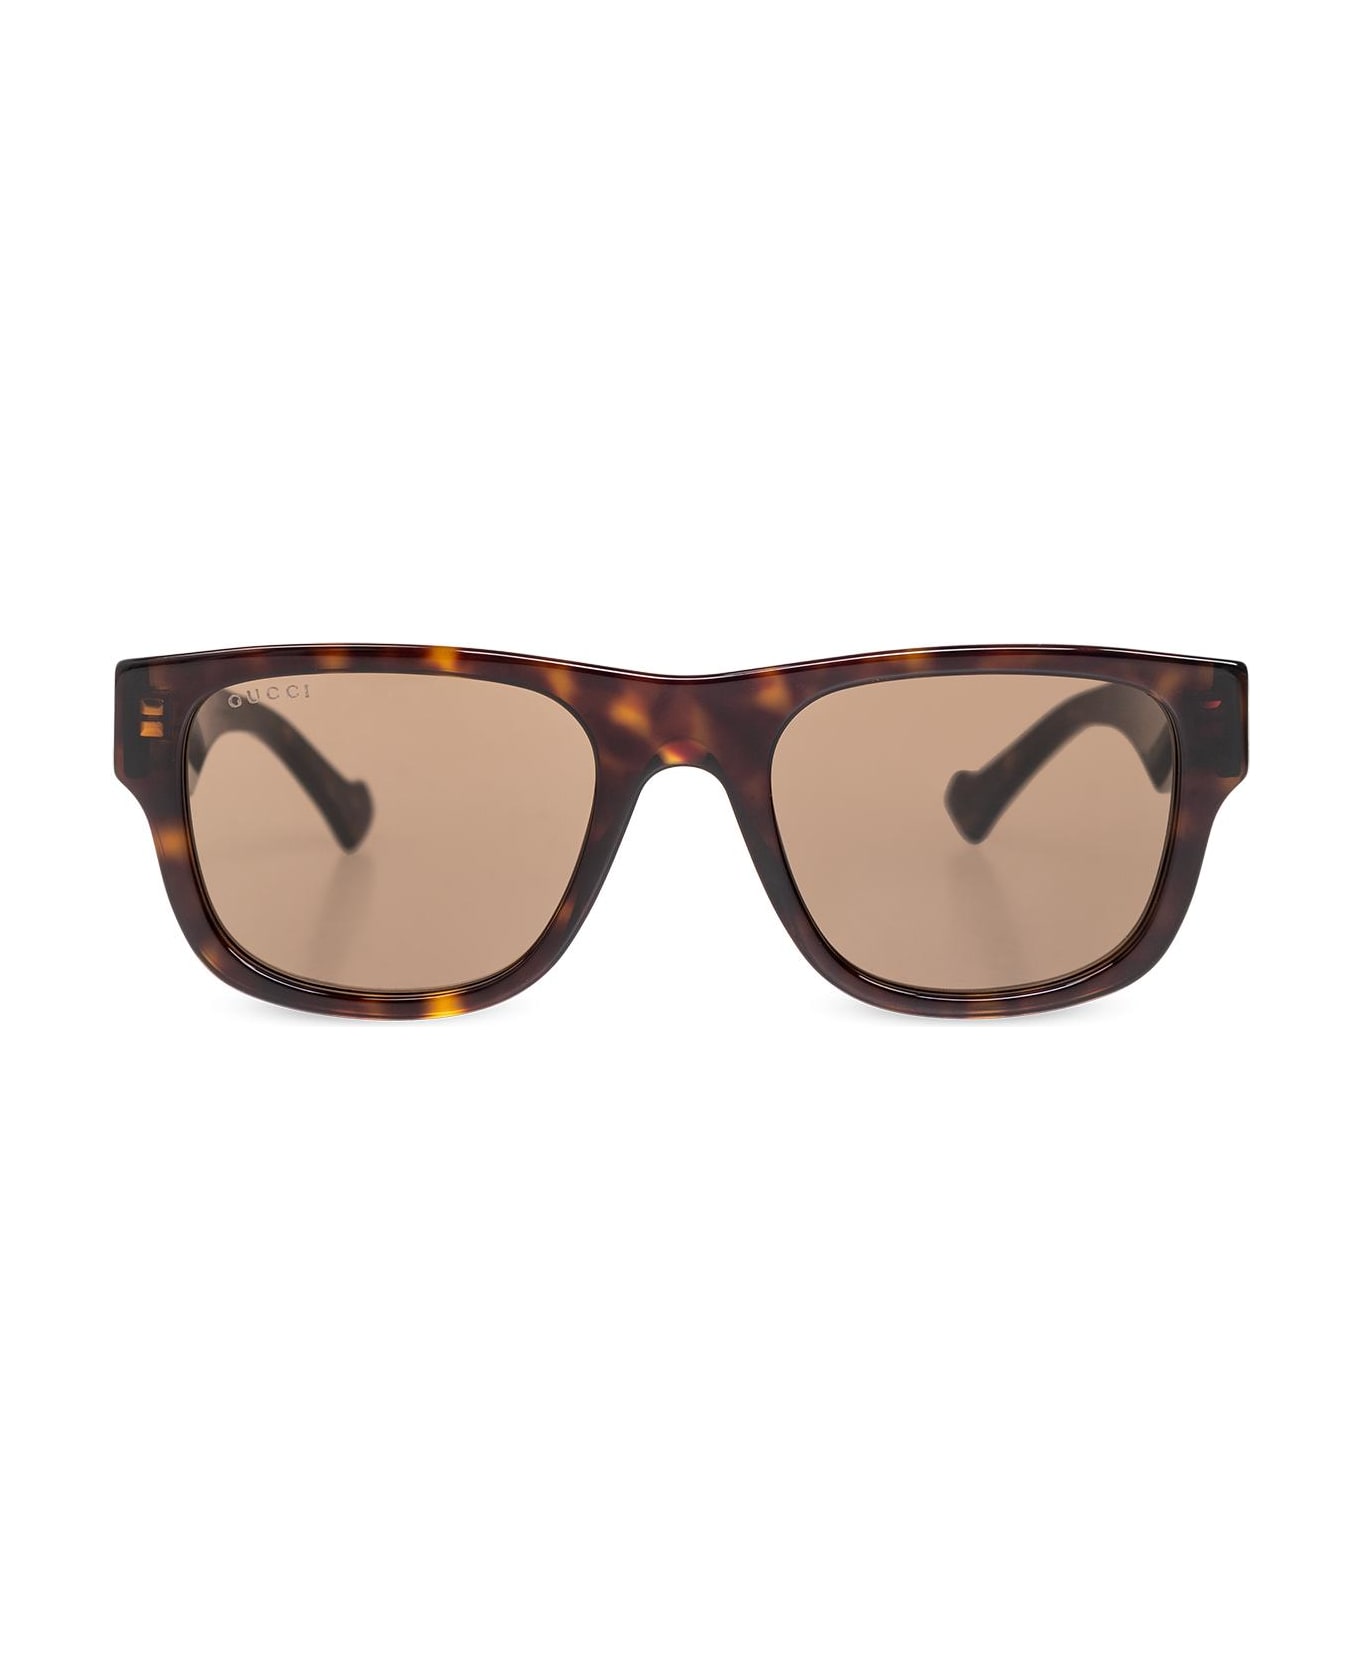 Gucci Eyewear Sunglasses With Logo サングラス